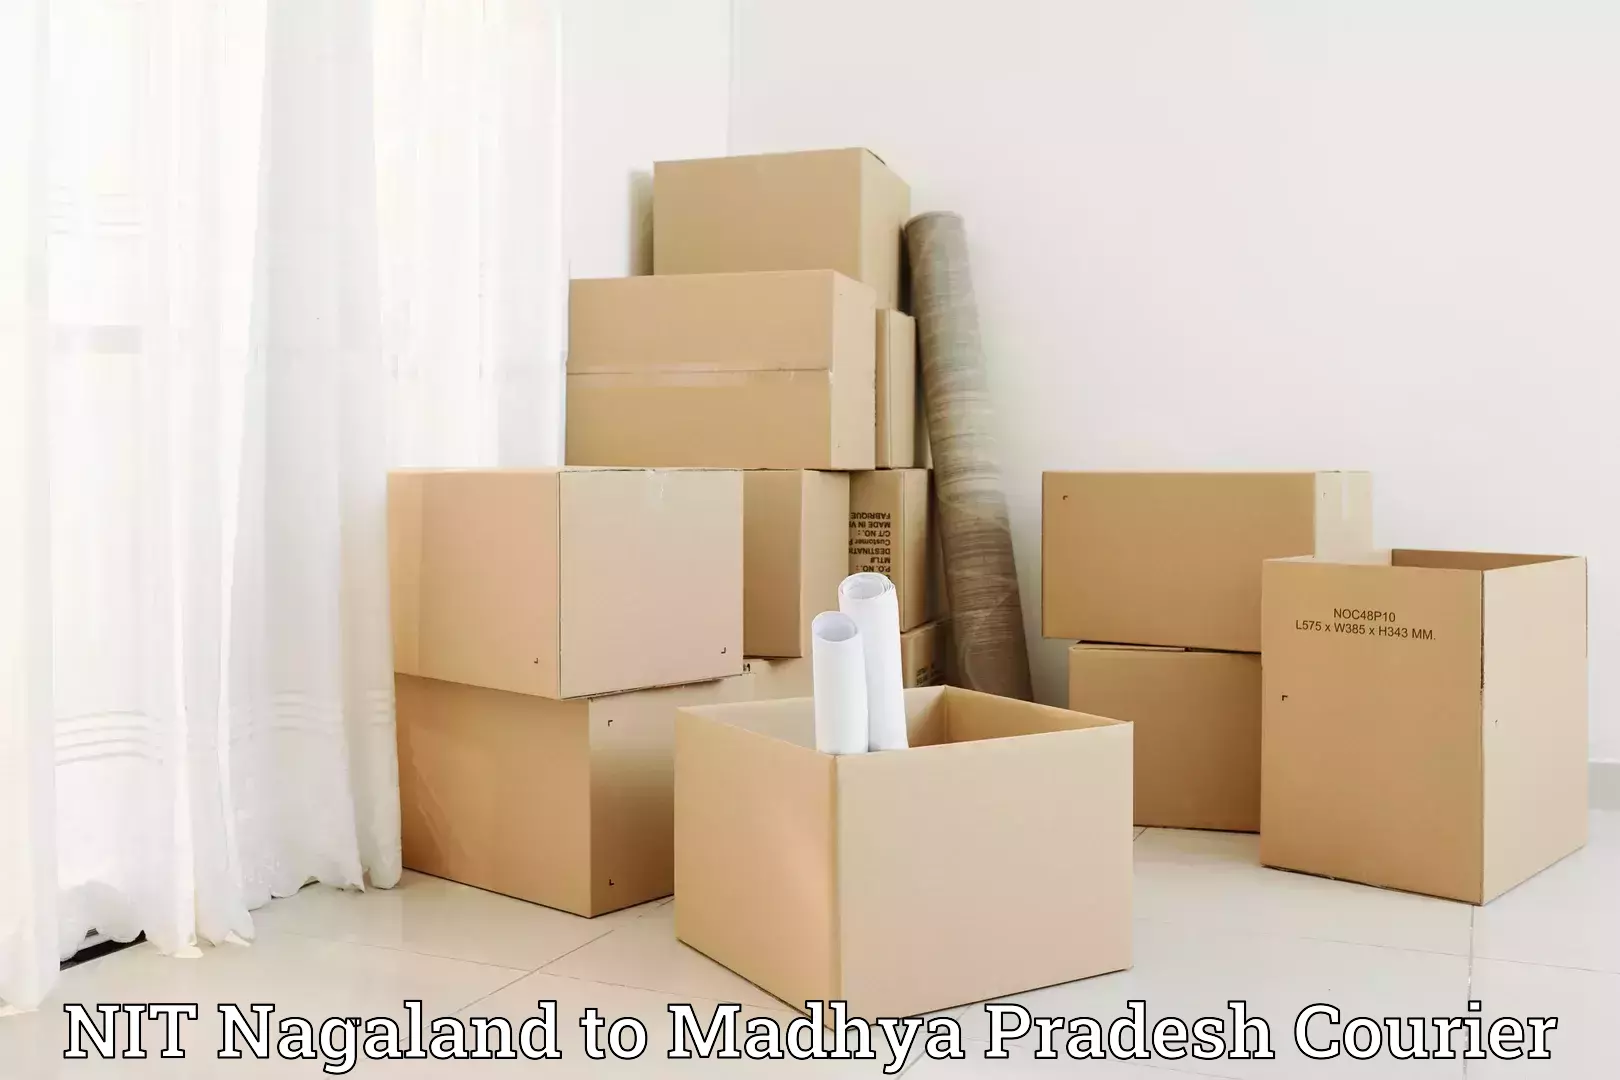 Home goods moving company NIT Nagaland to Hatta